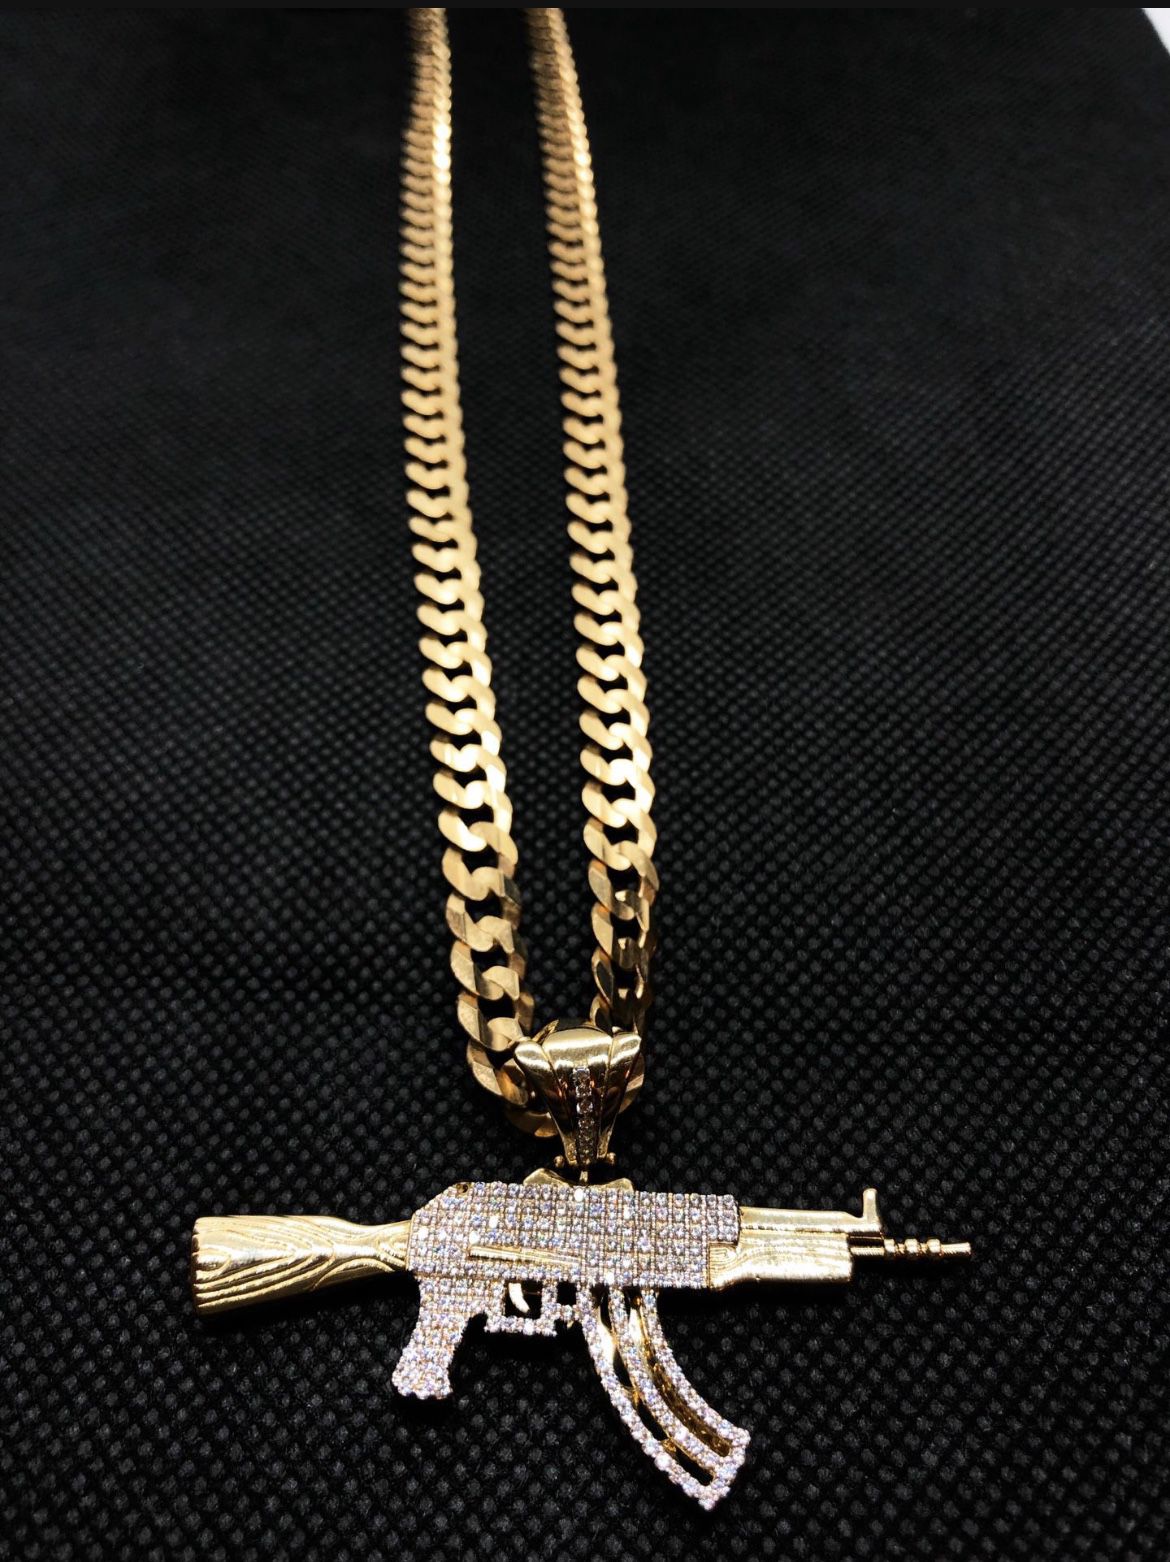 14k Solid gold Cuban Chain with Gun Charm